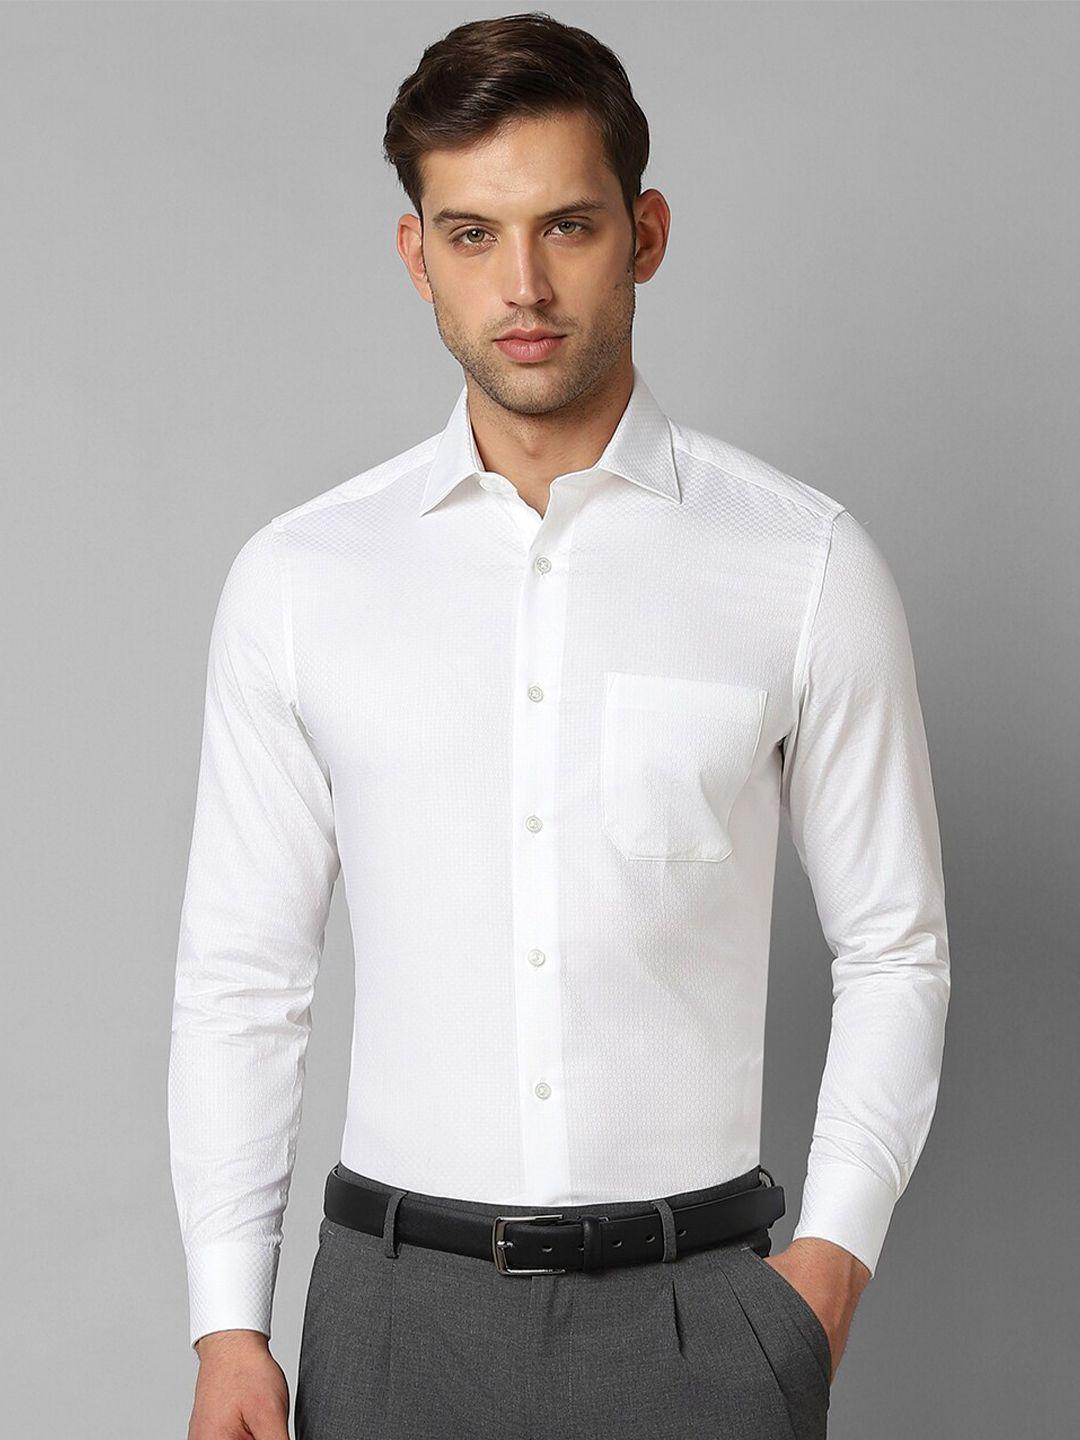 louis philippe men white opaque casual shirt